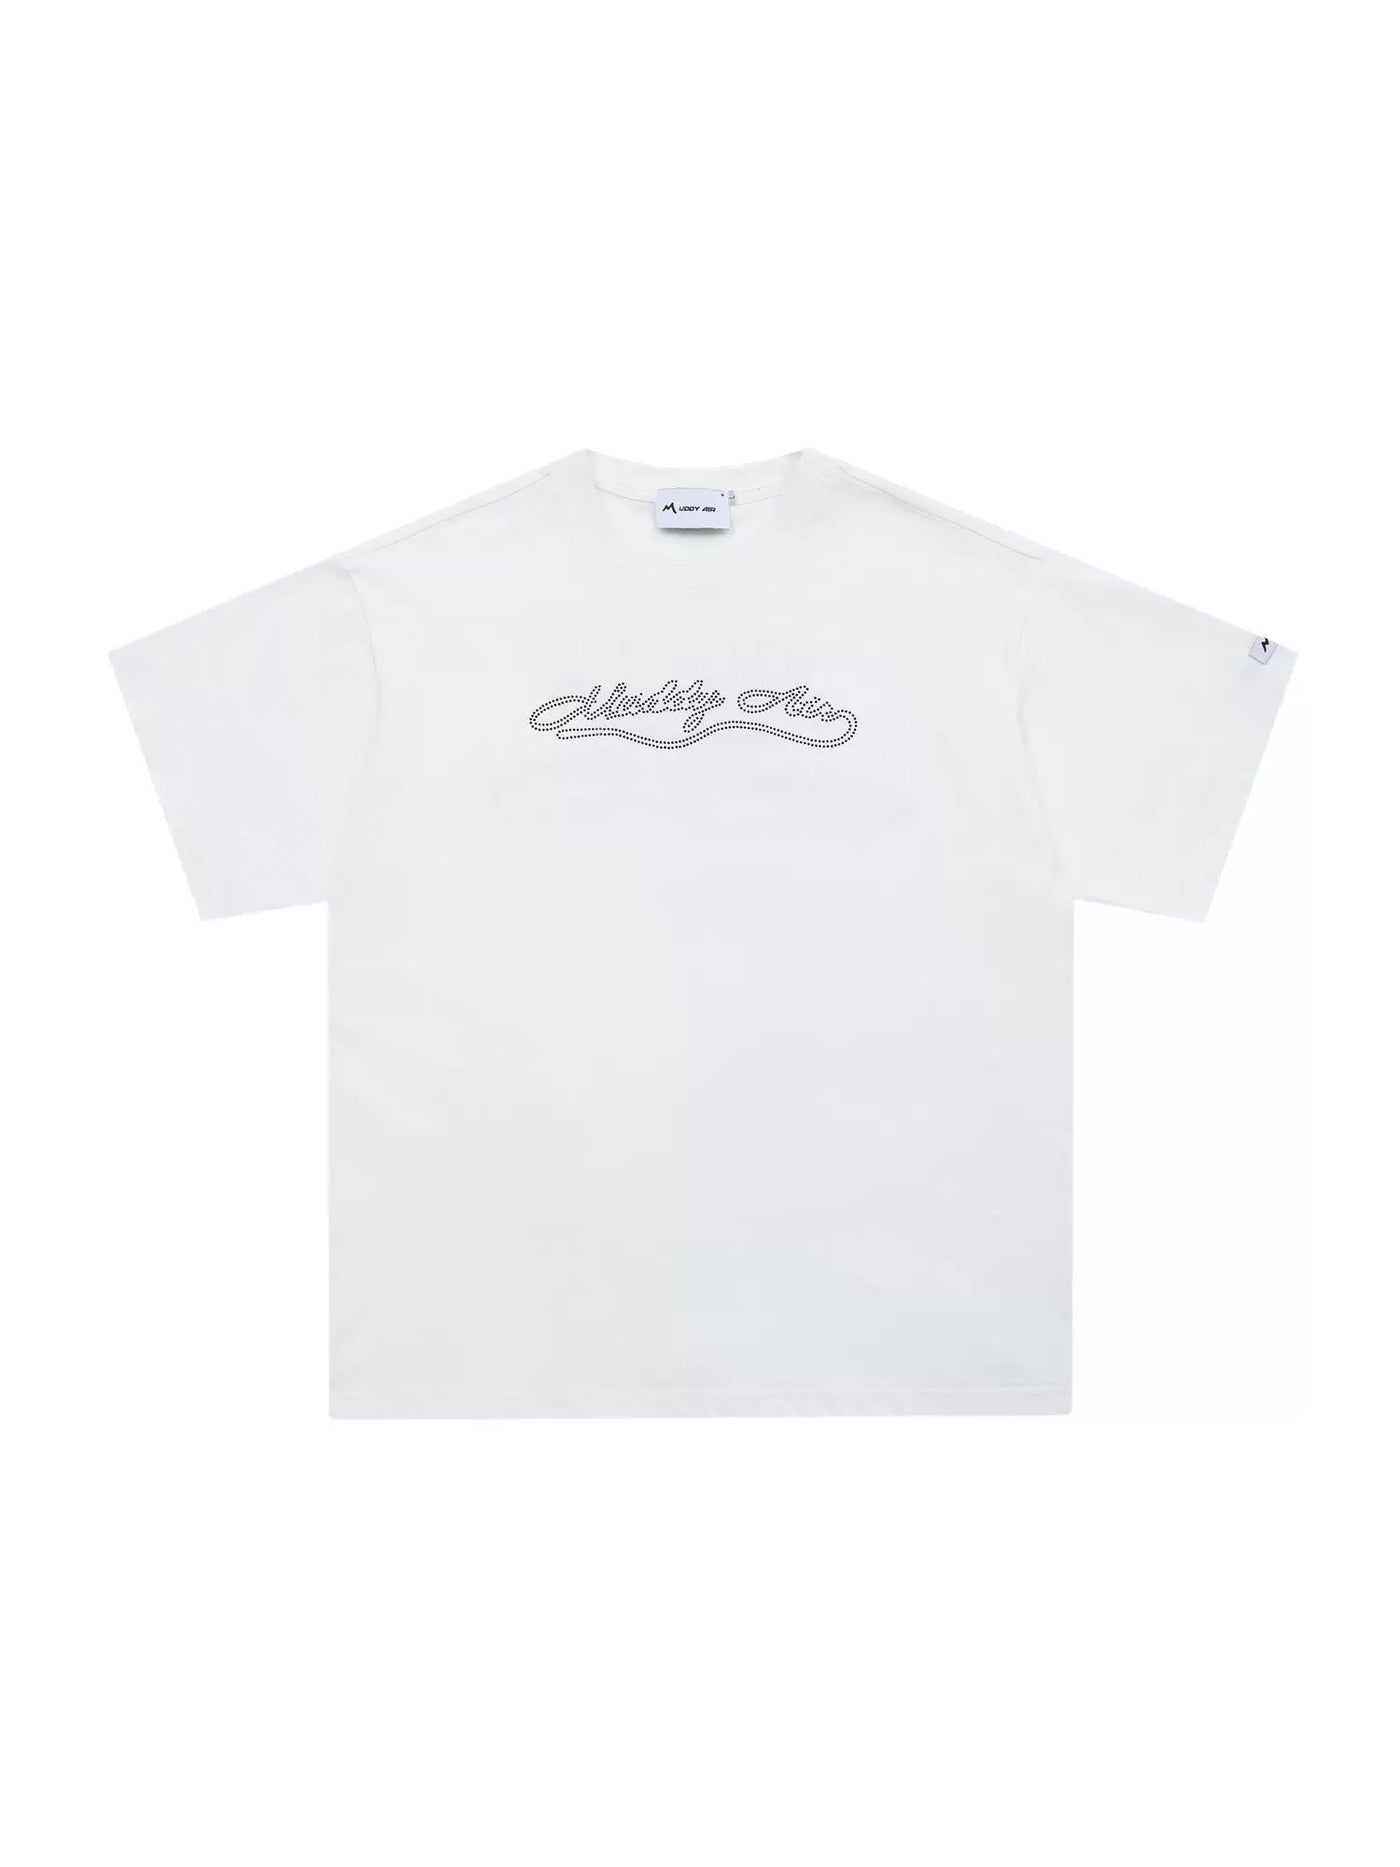 Rhinestone Letters T-Shirt Korean Street Fashion T-Shirt By MaxDstr Shop Online at OH Vault